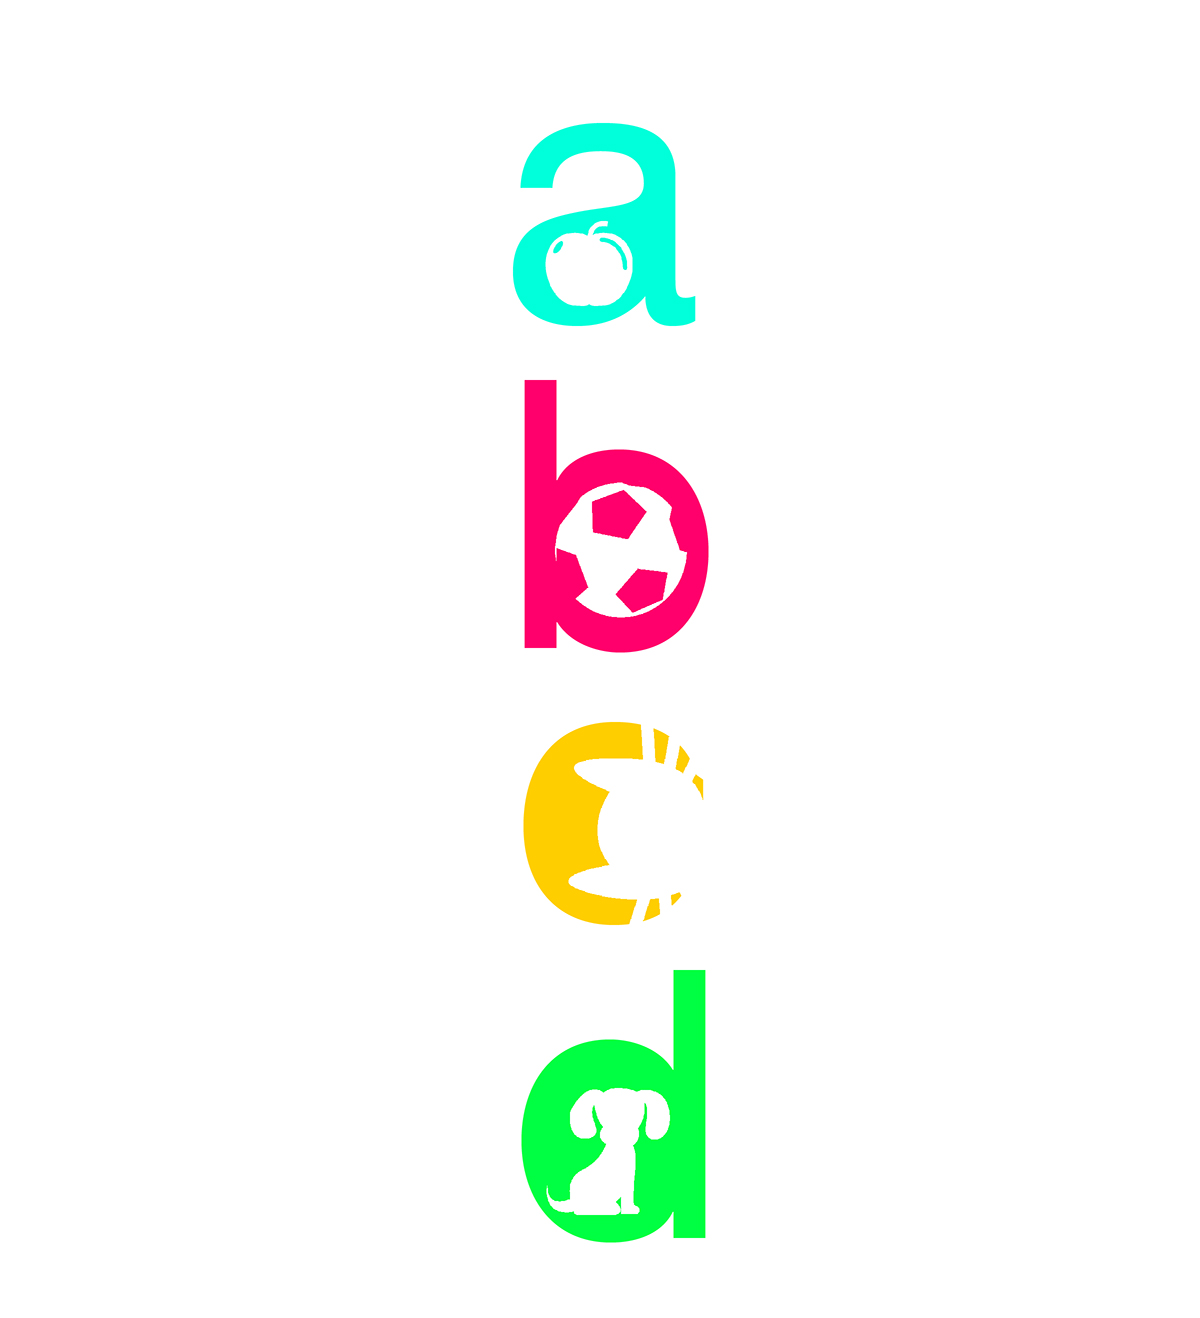 typograhpy expressive ABC alphabets Fun